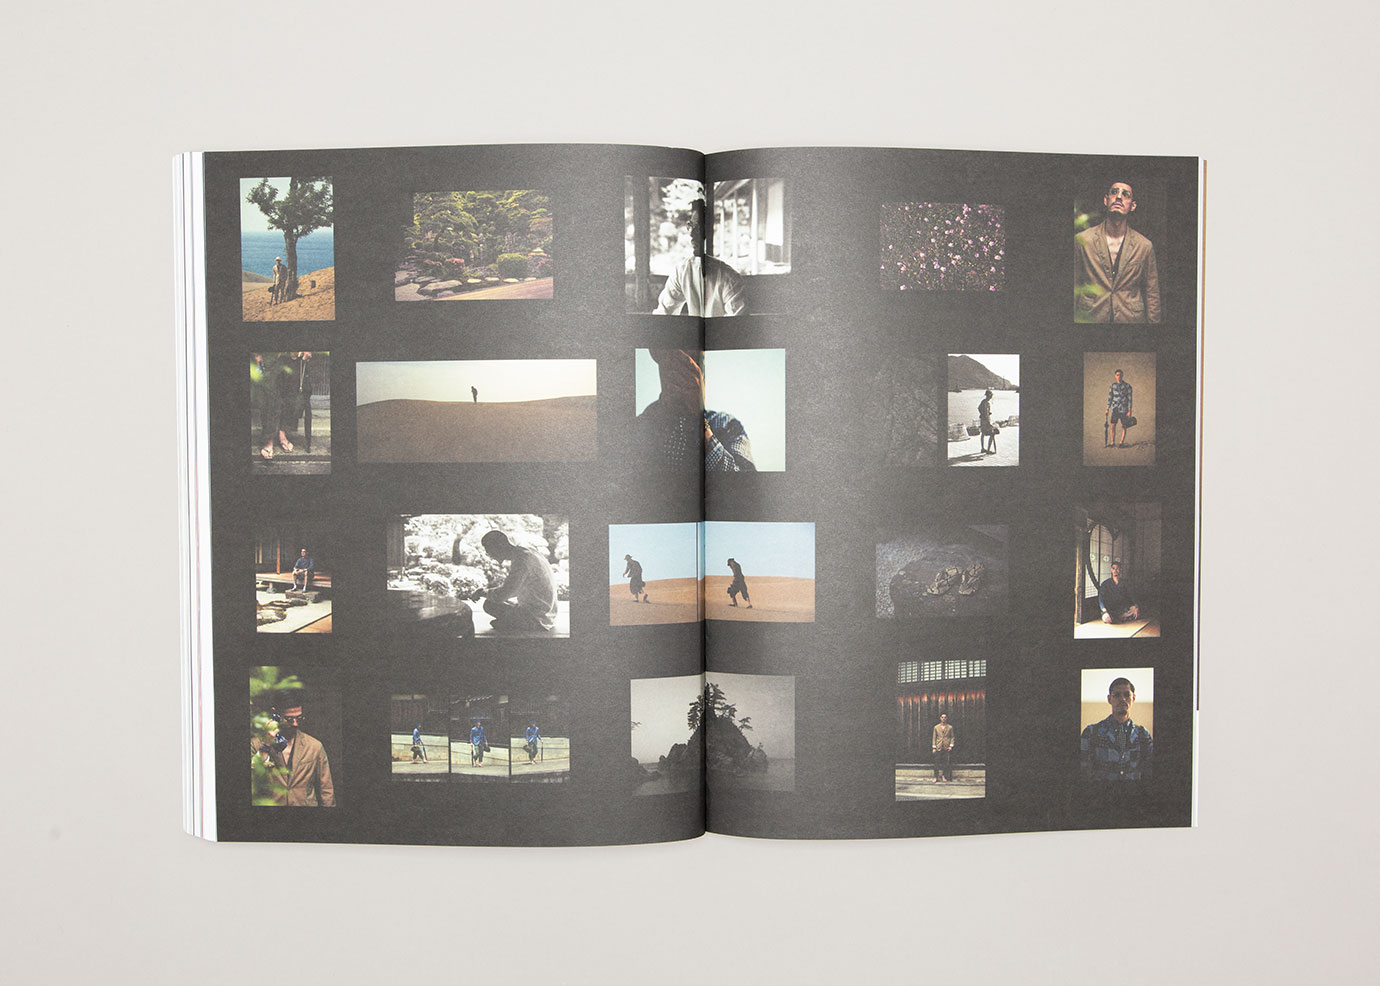 Anthony Hooper Graphic Design - Inventory Magazine - Issue 10: Spring-Summer ’14